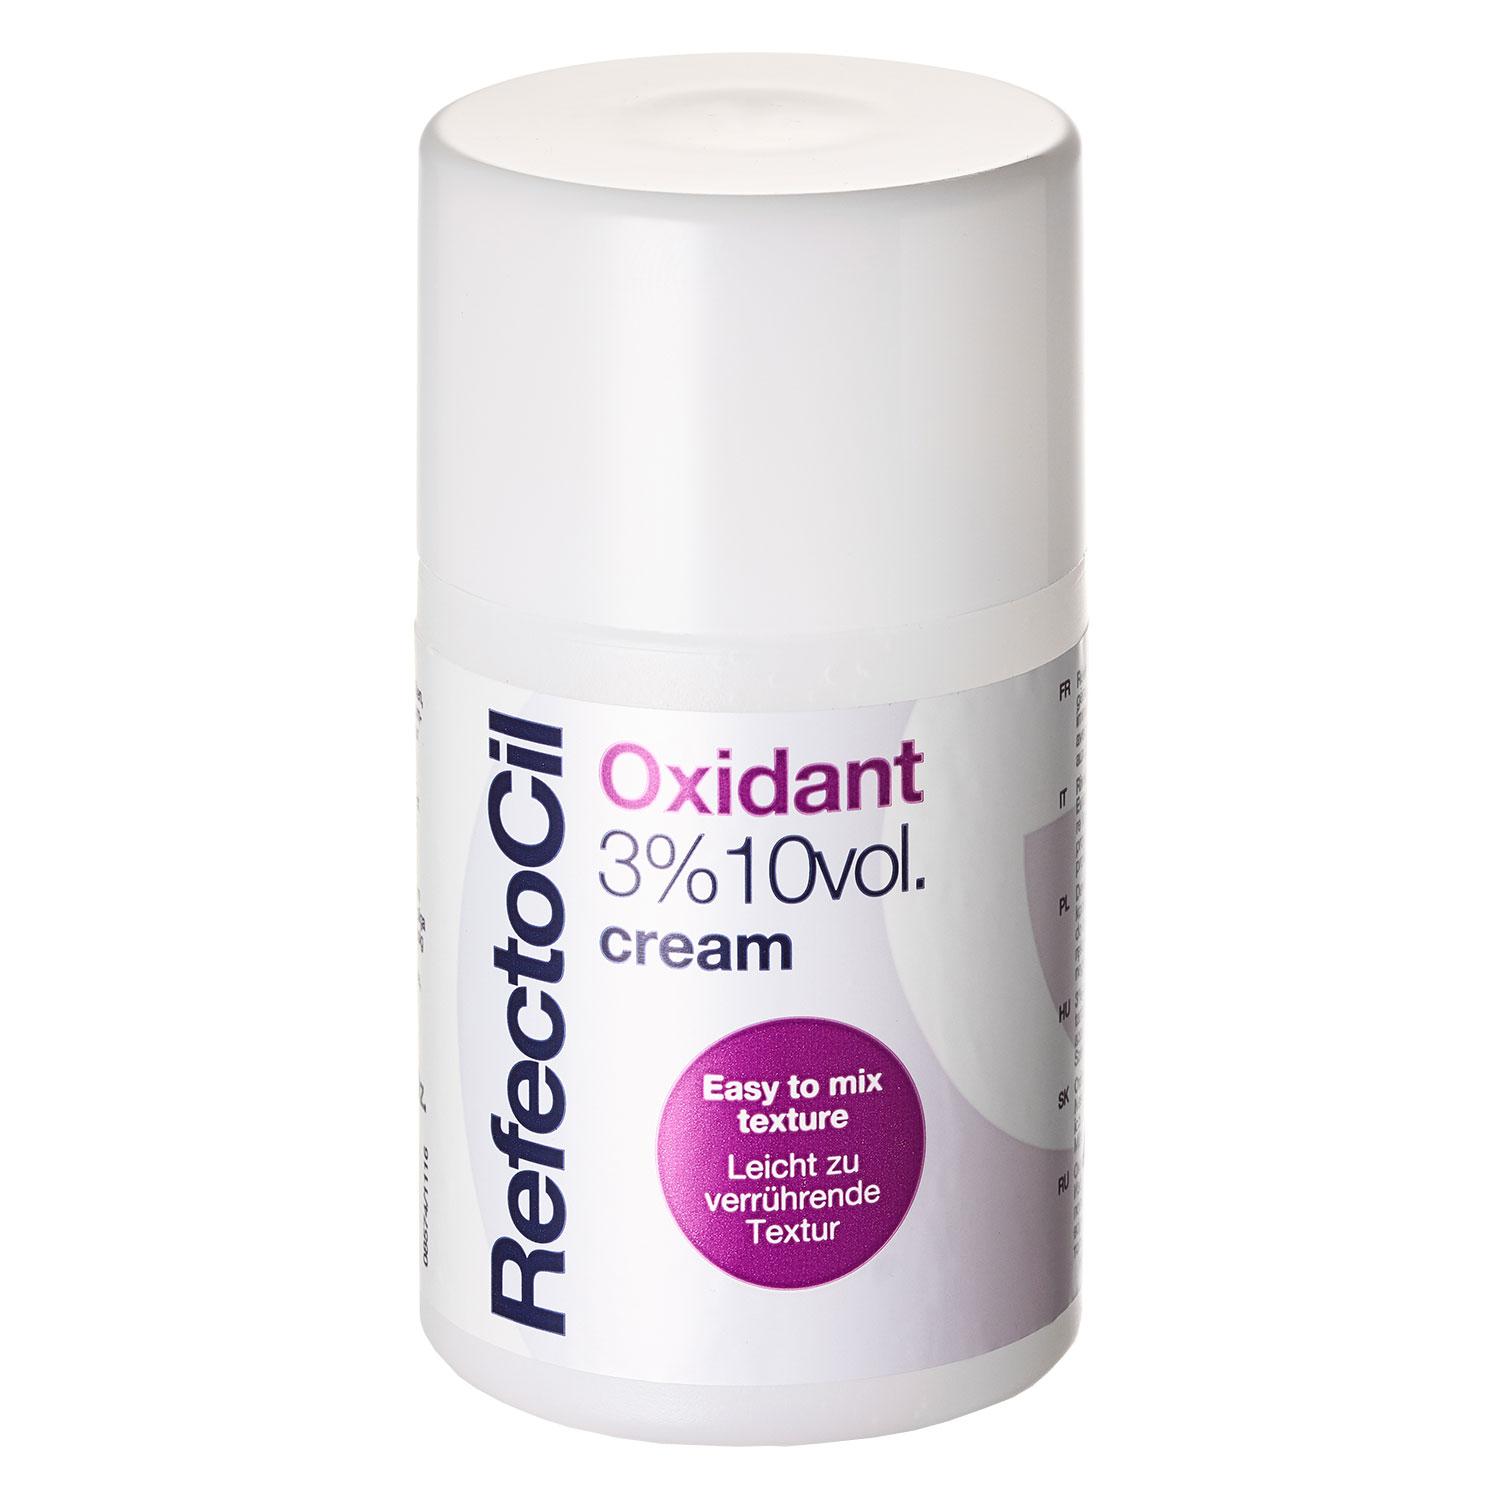 RefectoCil - Oxidant 3% Cream